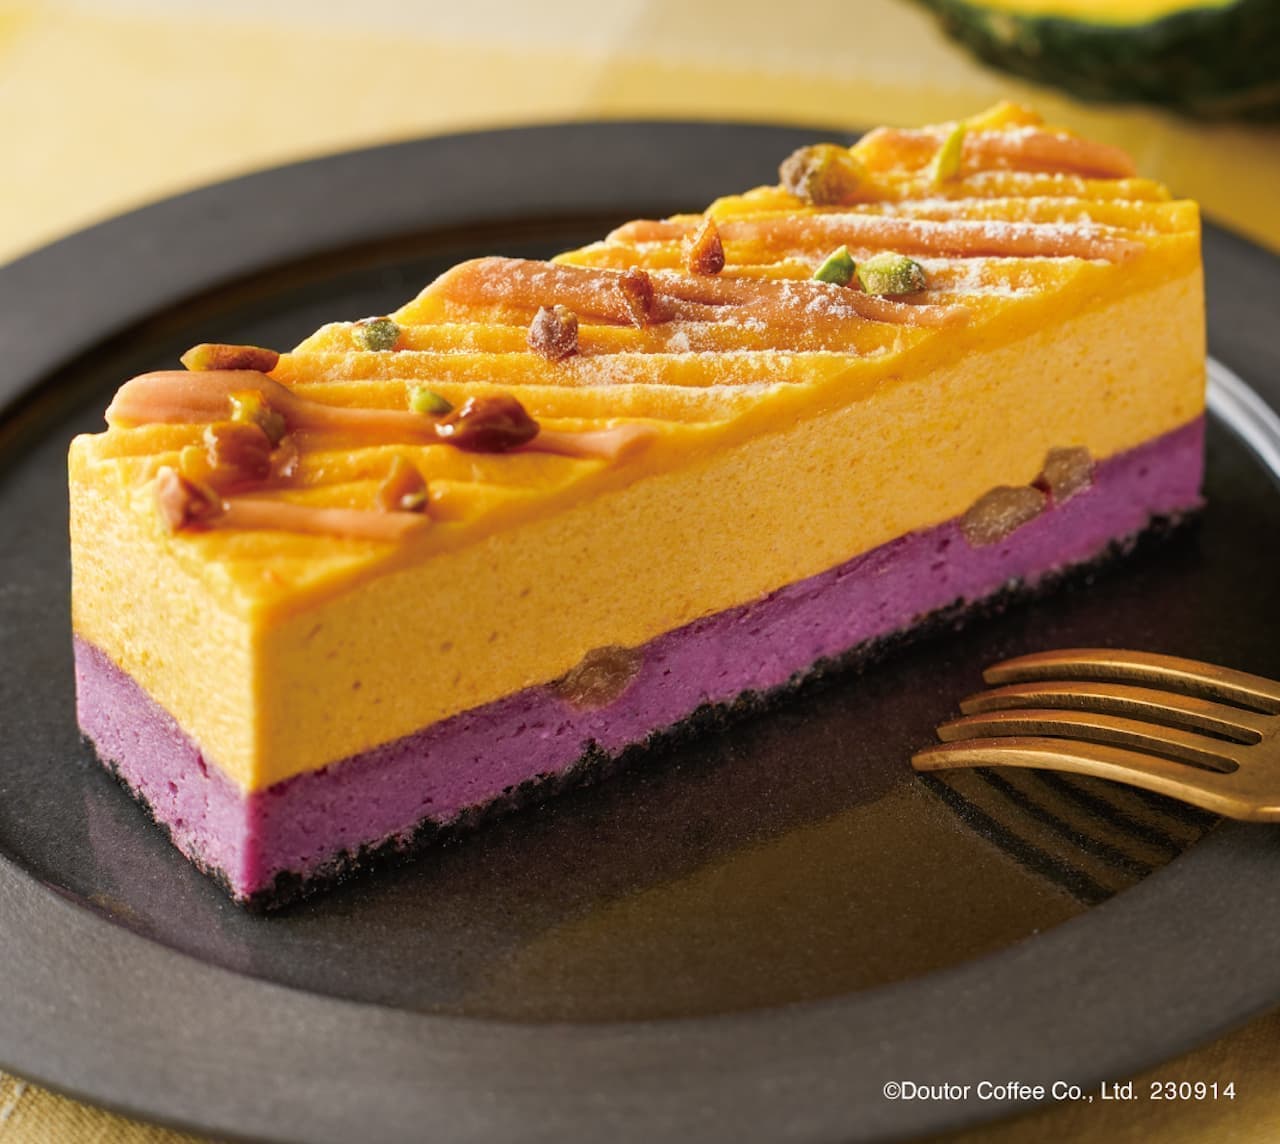 Excelsior "Pumpkin and Purple Sweet Potato Cake